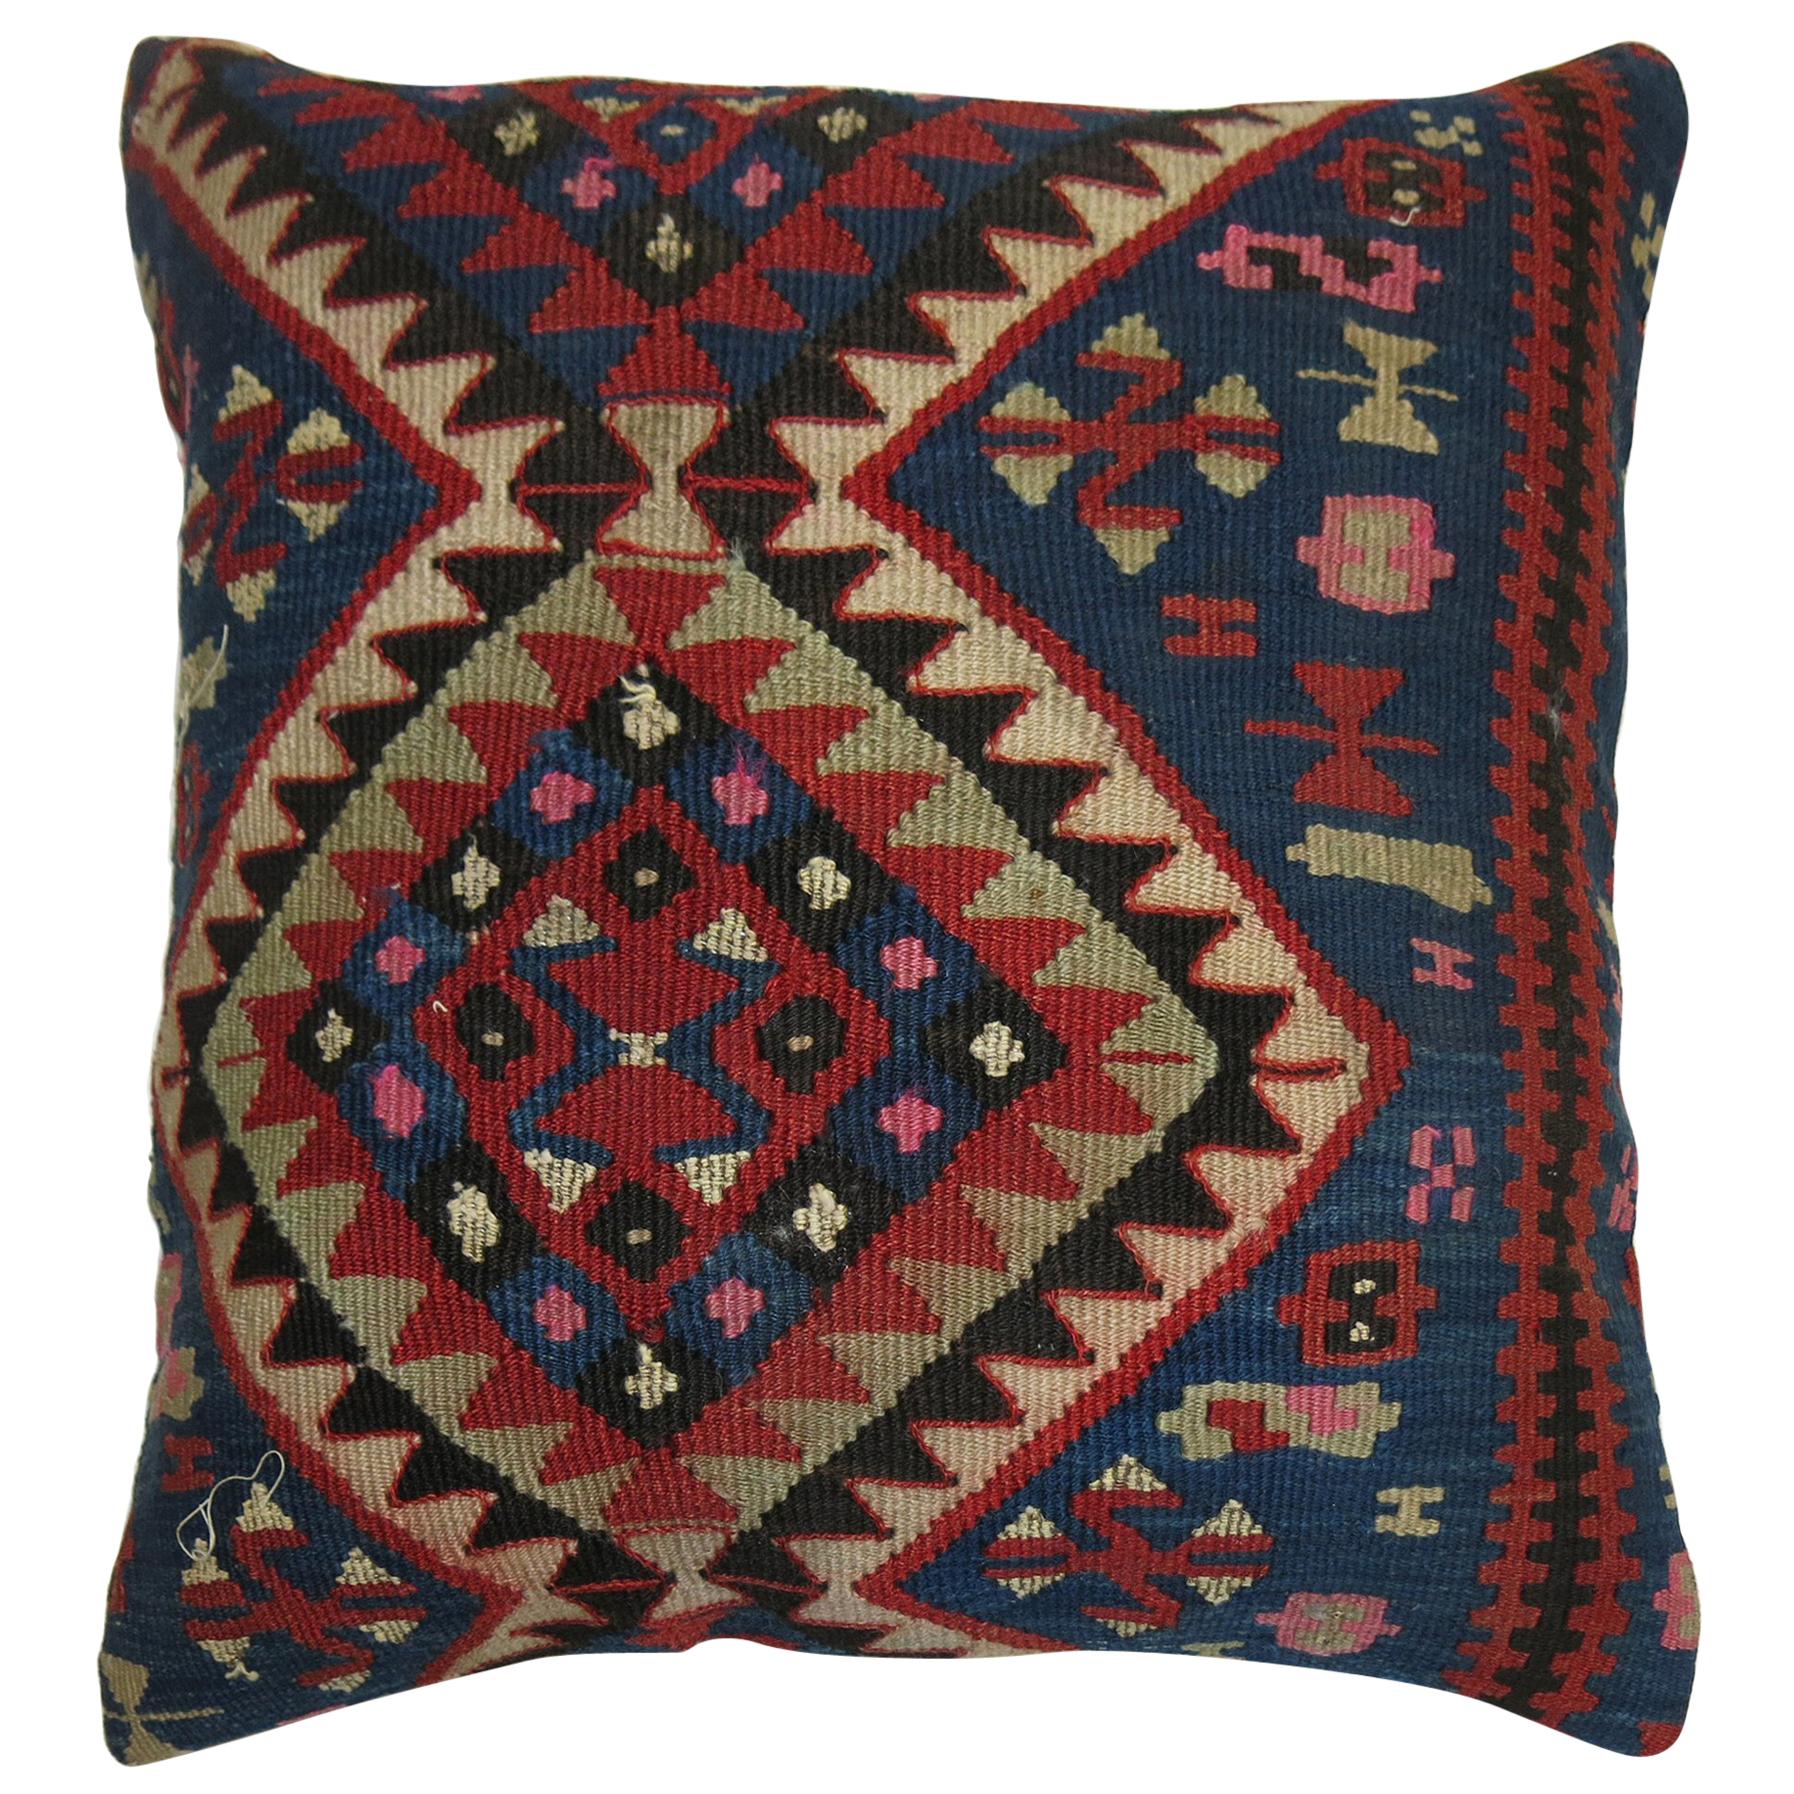 Antique Persian Kilim Pillow